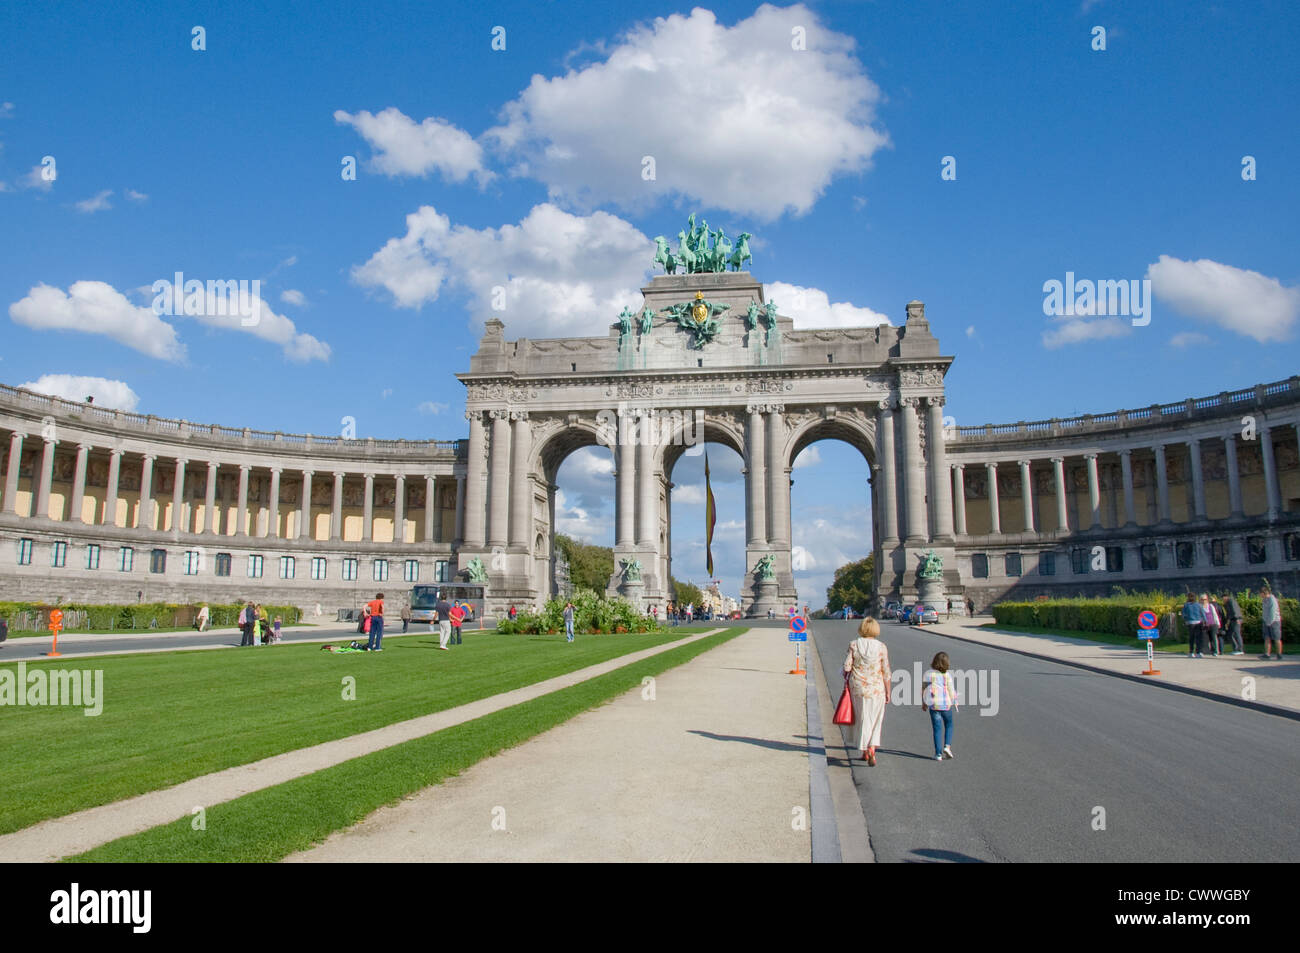 The triumphal arch in Parc du Cinquantenaire in Brussels Belgium Stock Photo